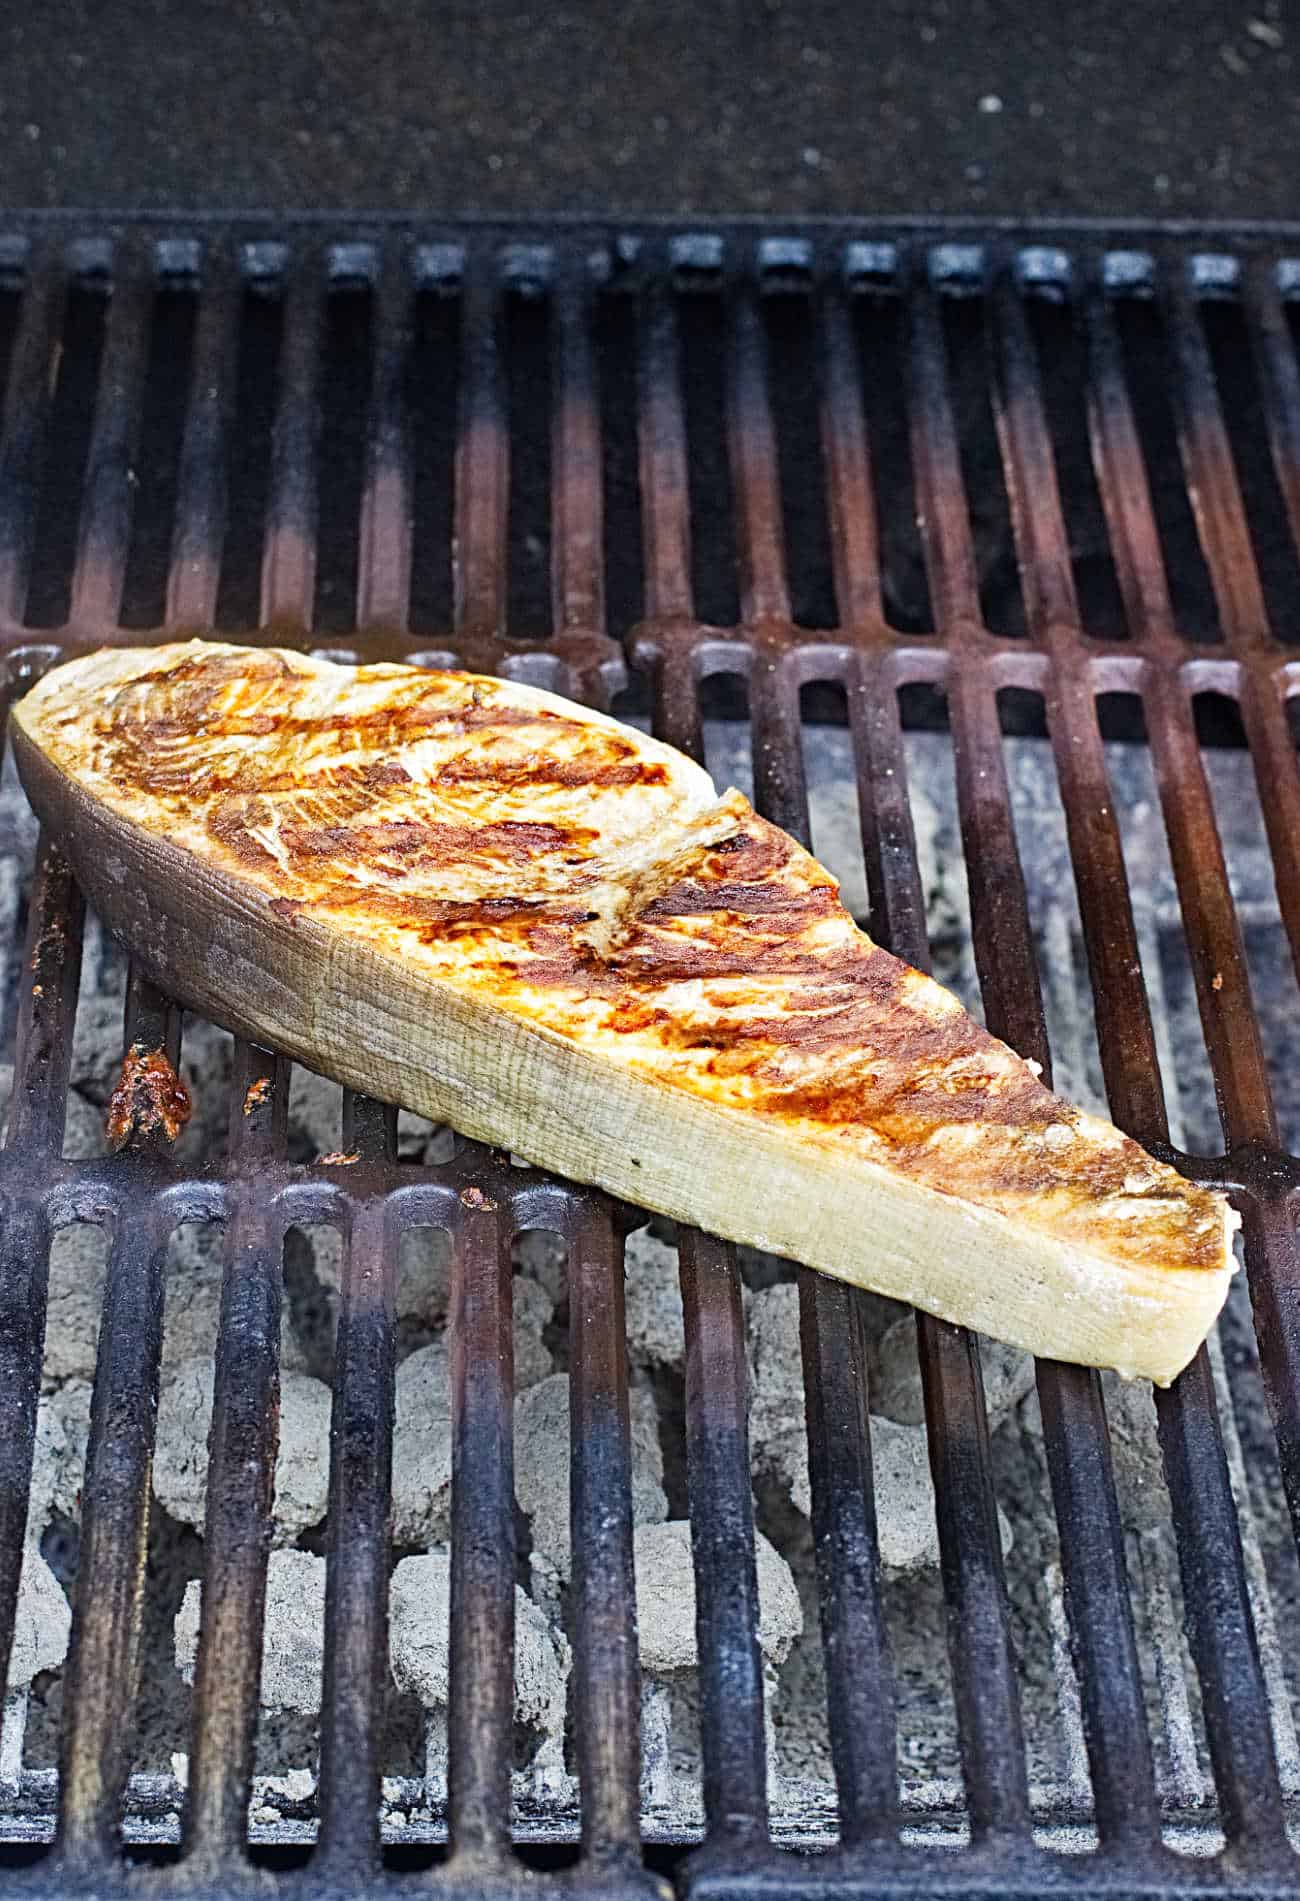 Swordfish steak on a hot grill